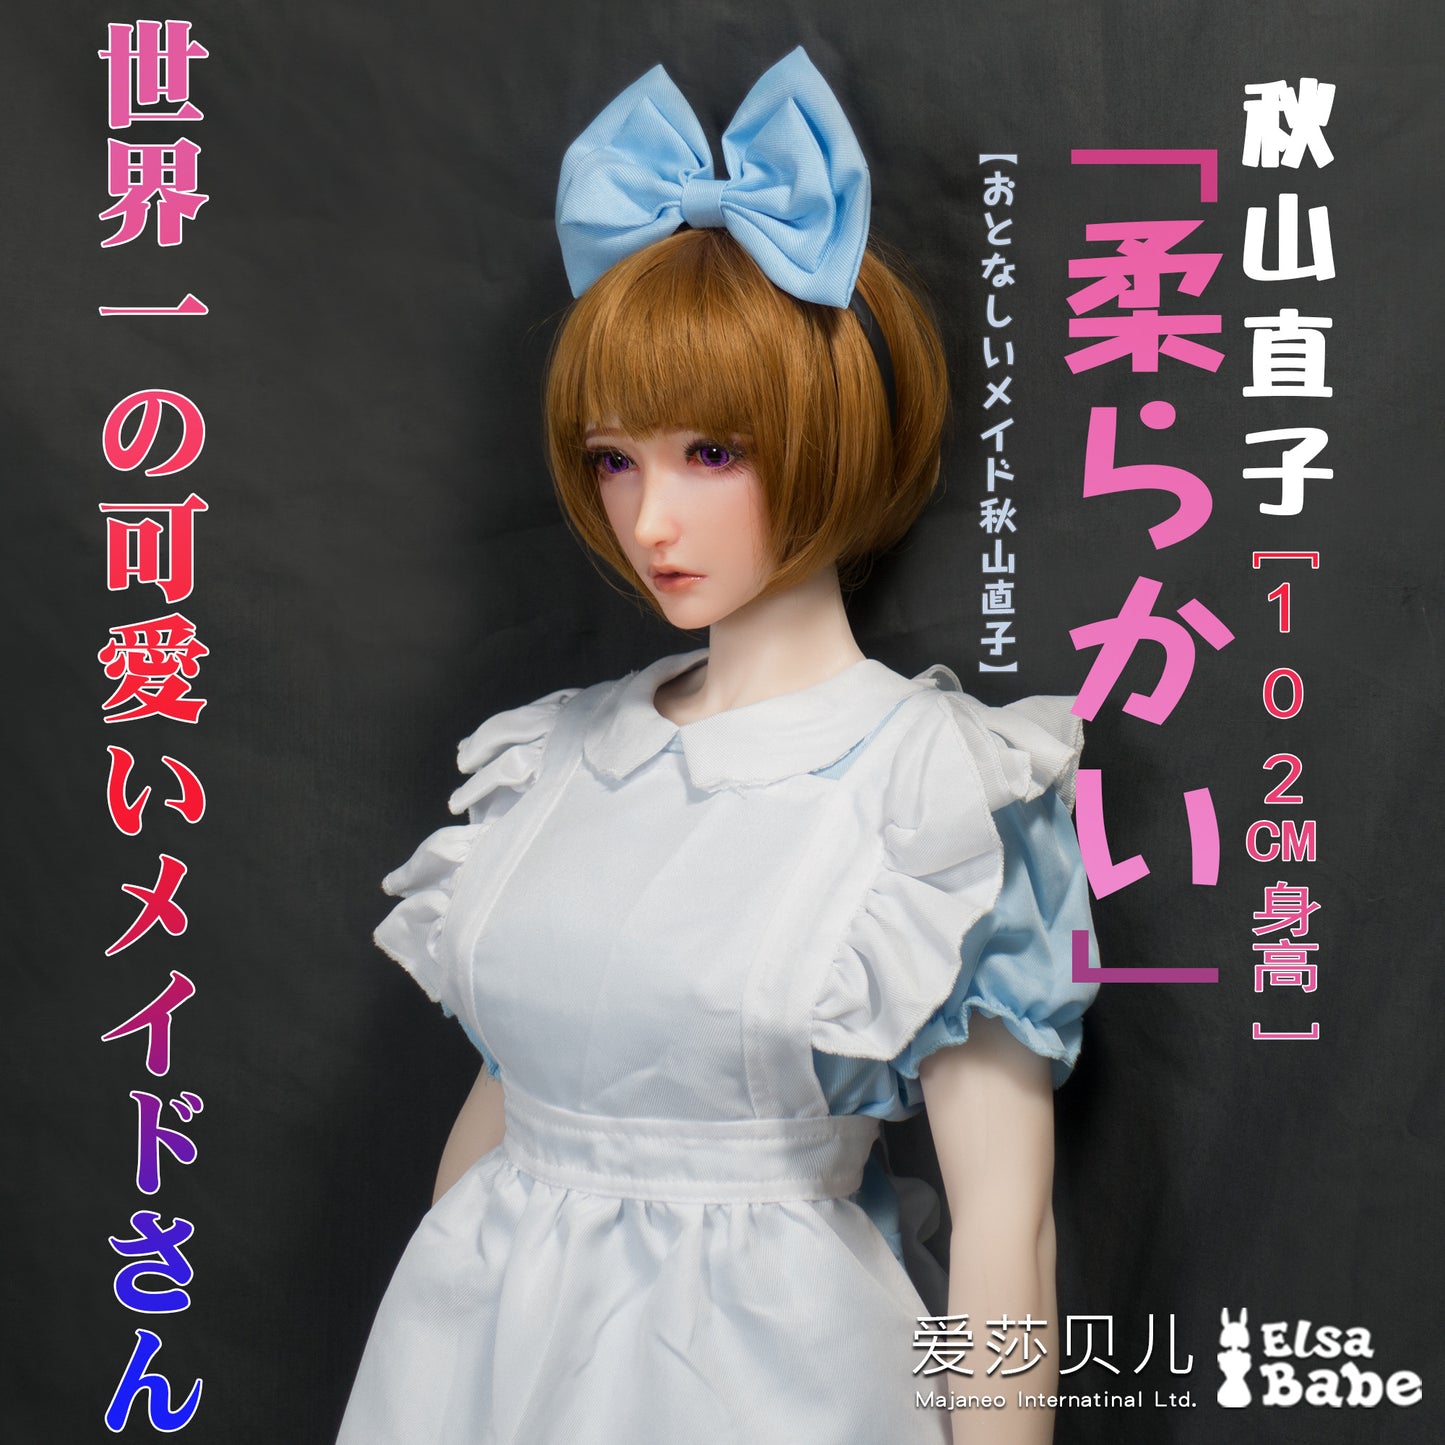 ElsaBabe 102cm Big Breasts Platinum Silicone Sex Doll Anime Figure Body Real Solid Erotic Toy With Metal Skeleton, Akiyama Naoko